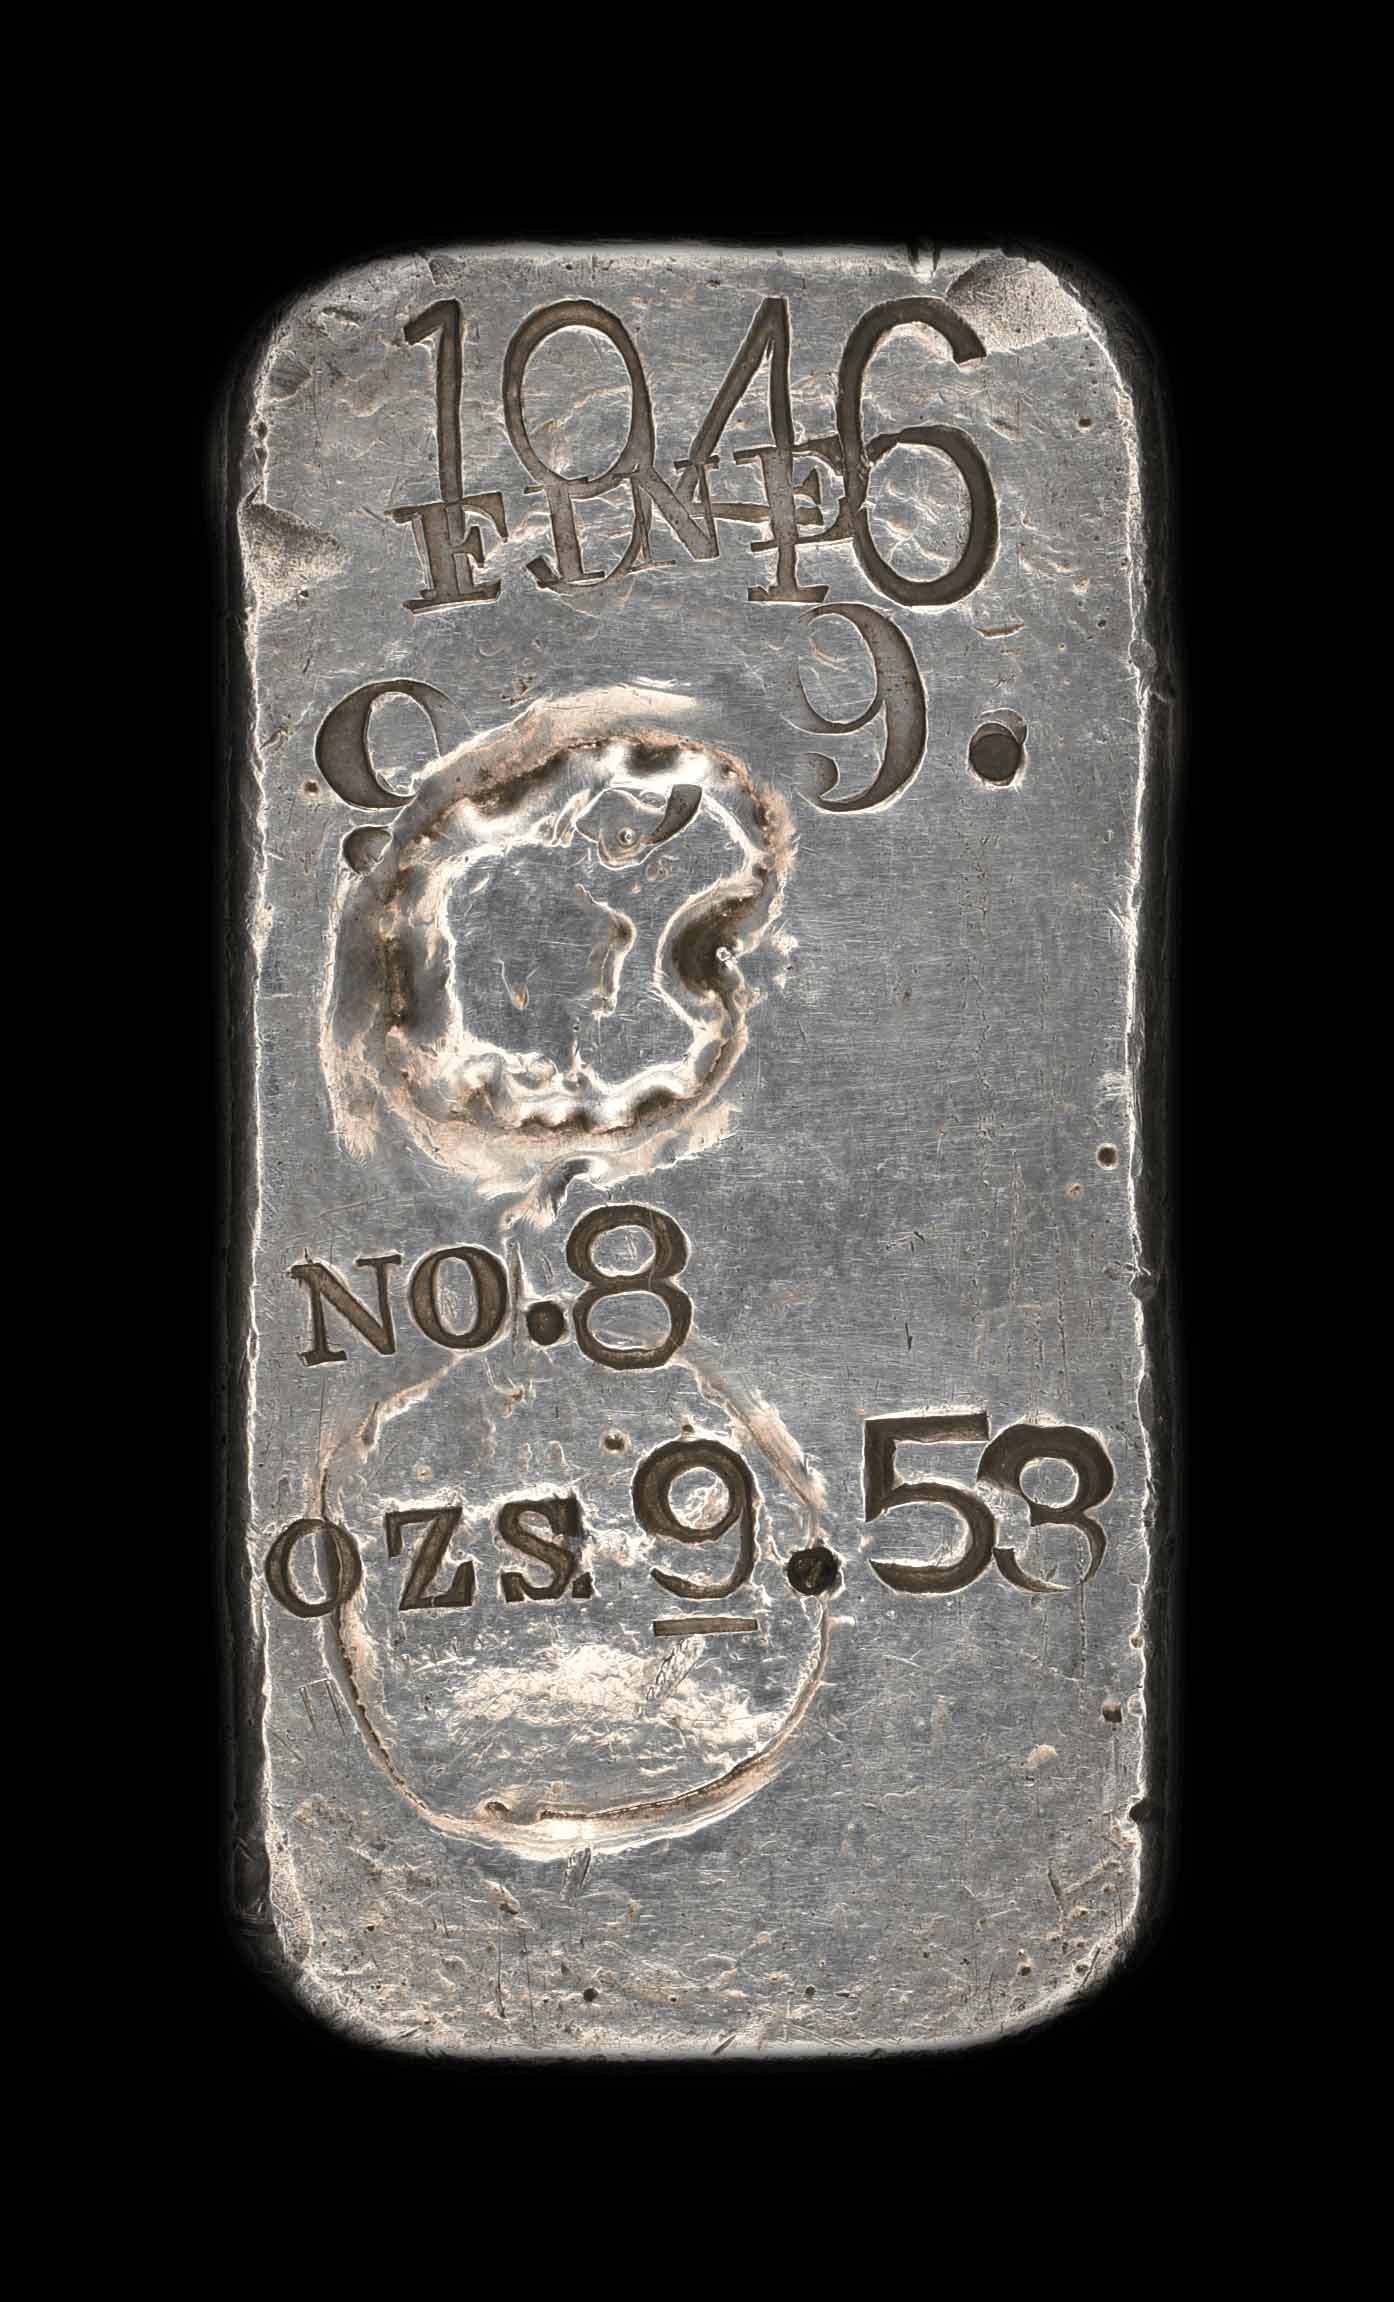 1946 U. S. Mint Philadelphia No. 8, 9.53 ozs (r)